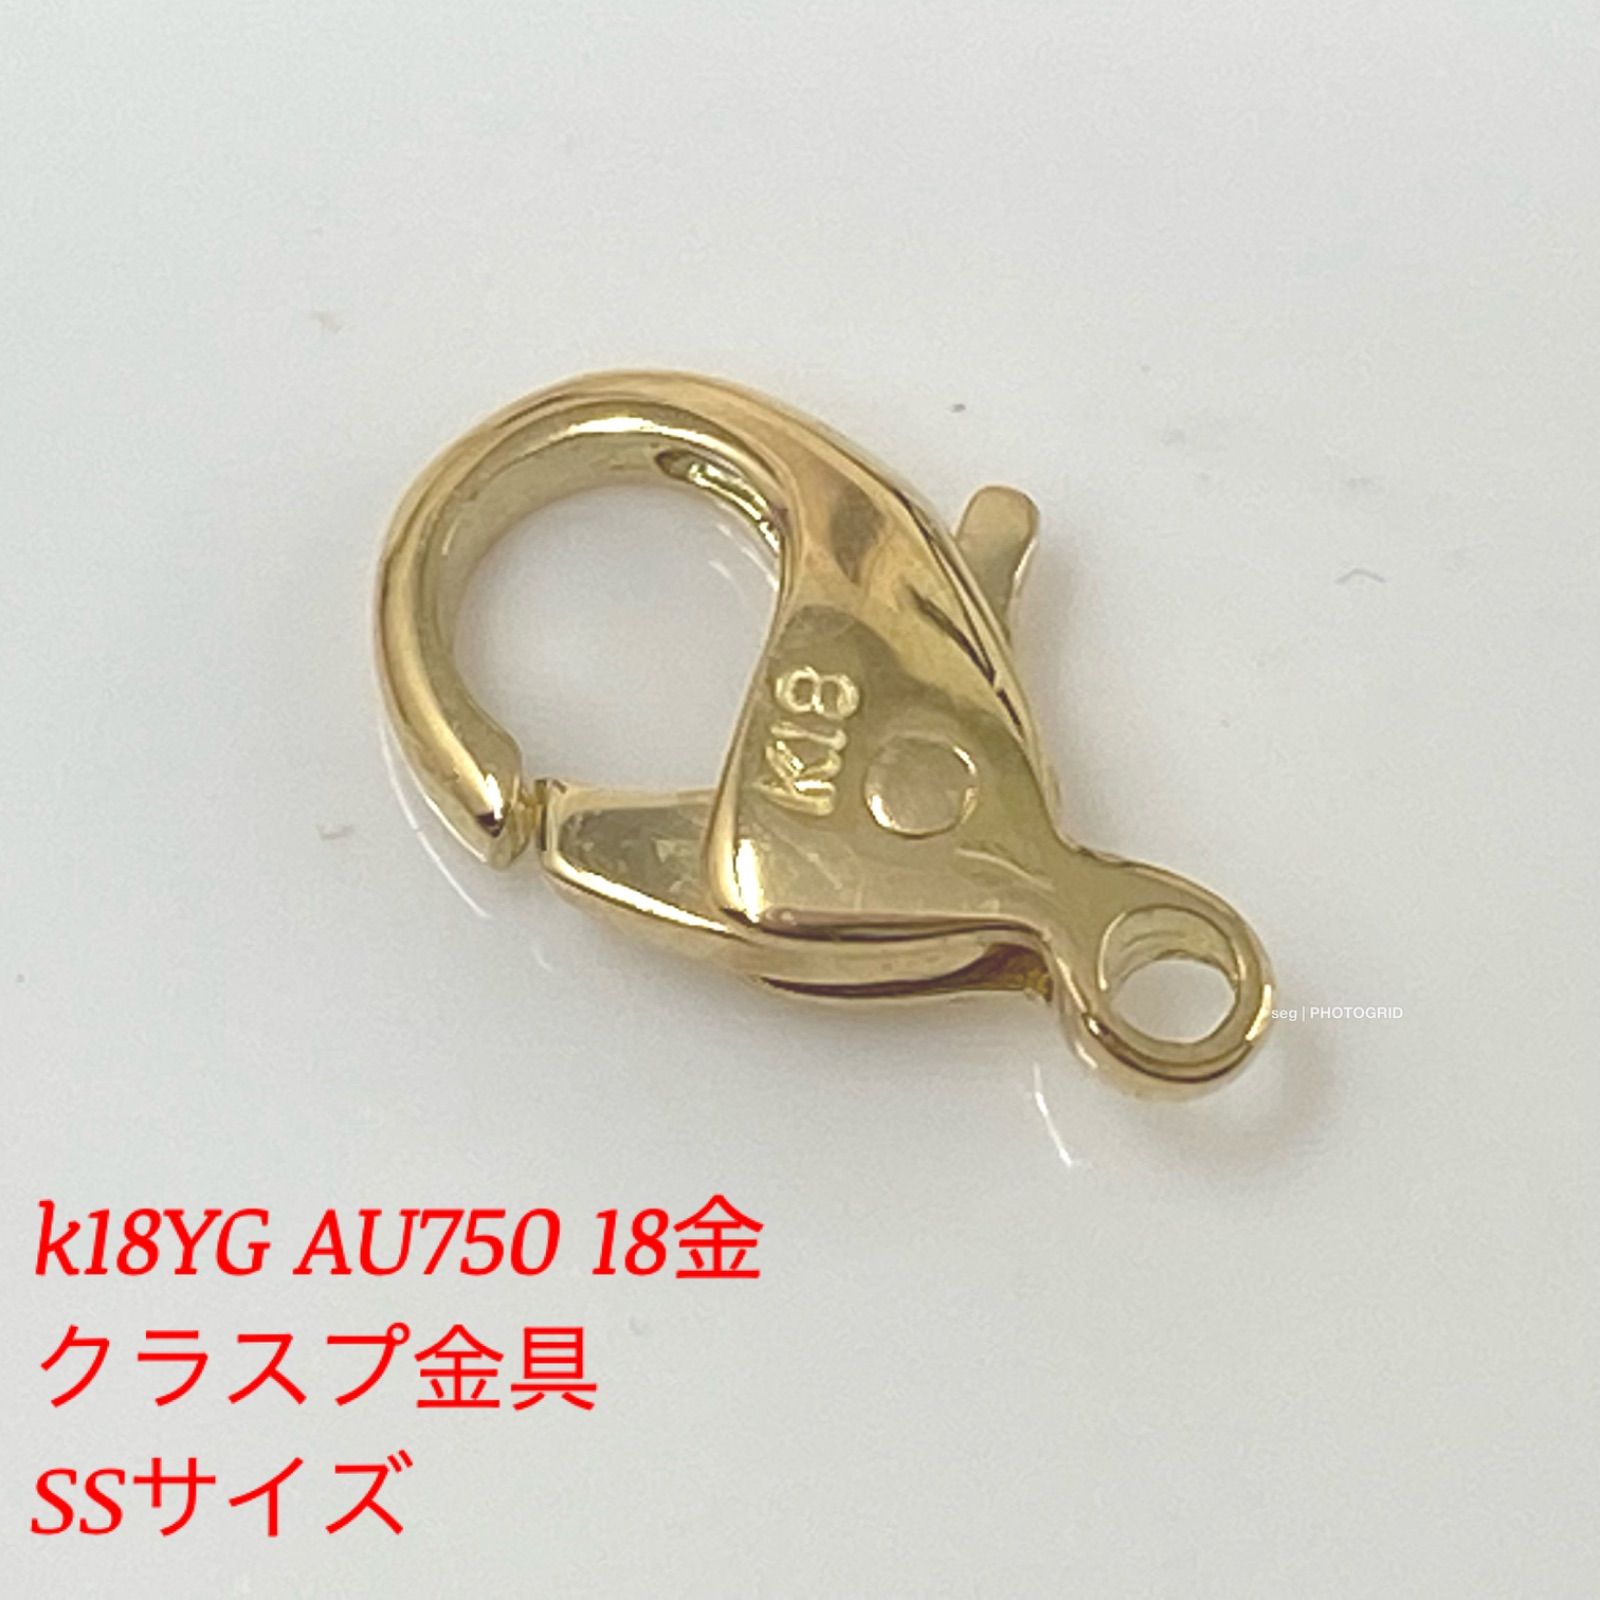 k18YG AU750 18金 クラスプ 金具 パーツ ssサイズ - メルカリ